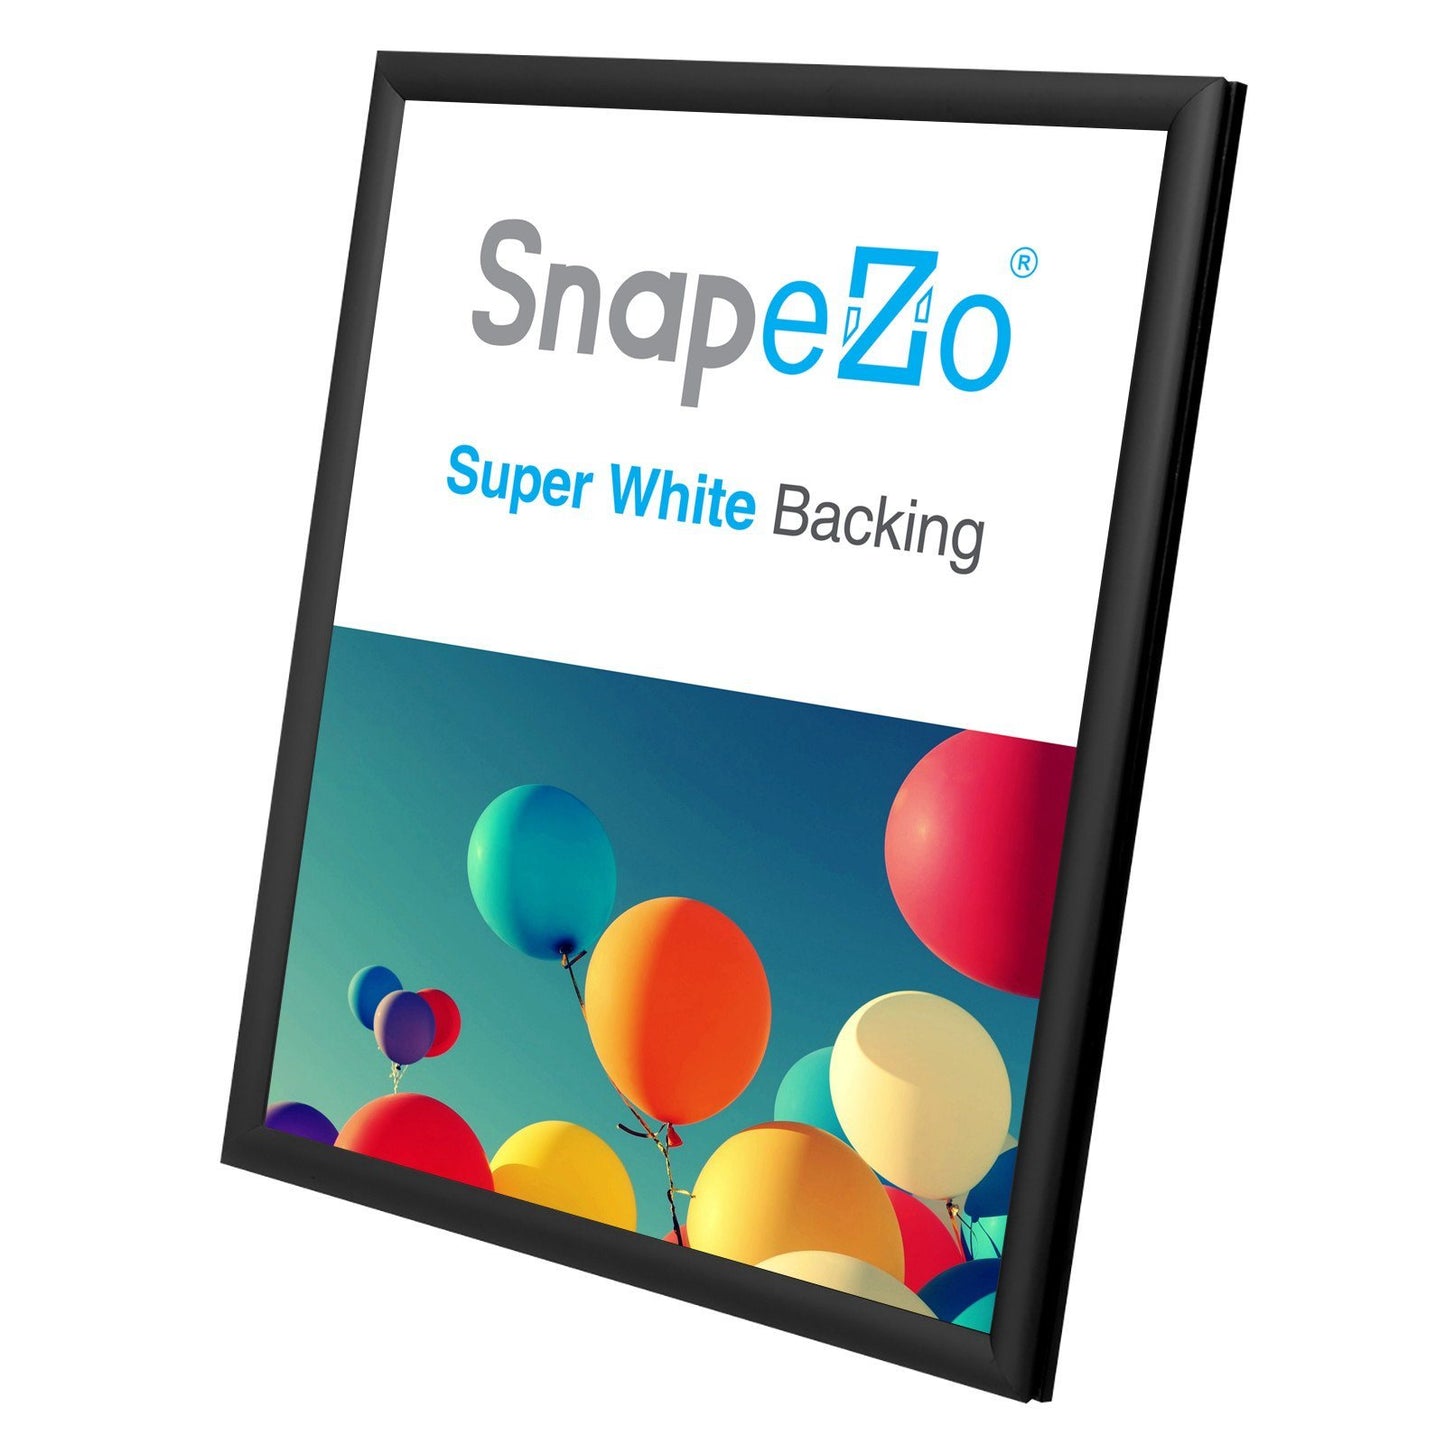 11x14 Black SnapeZo® Snap Frame - 0.6 Inch Profile